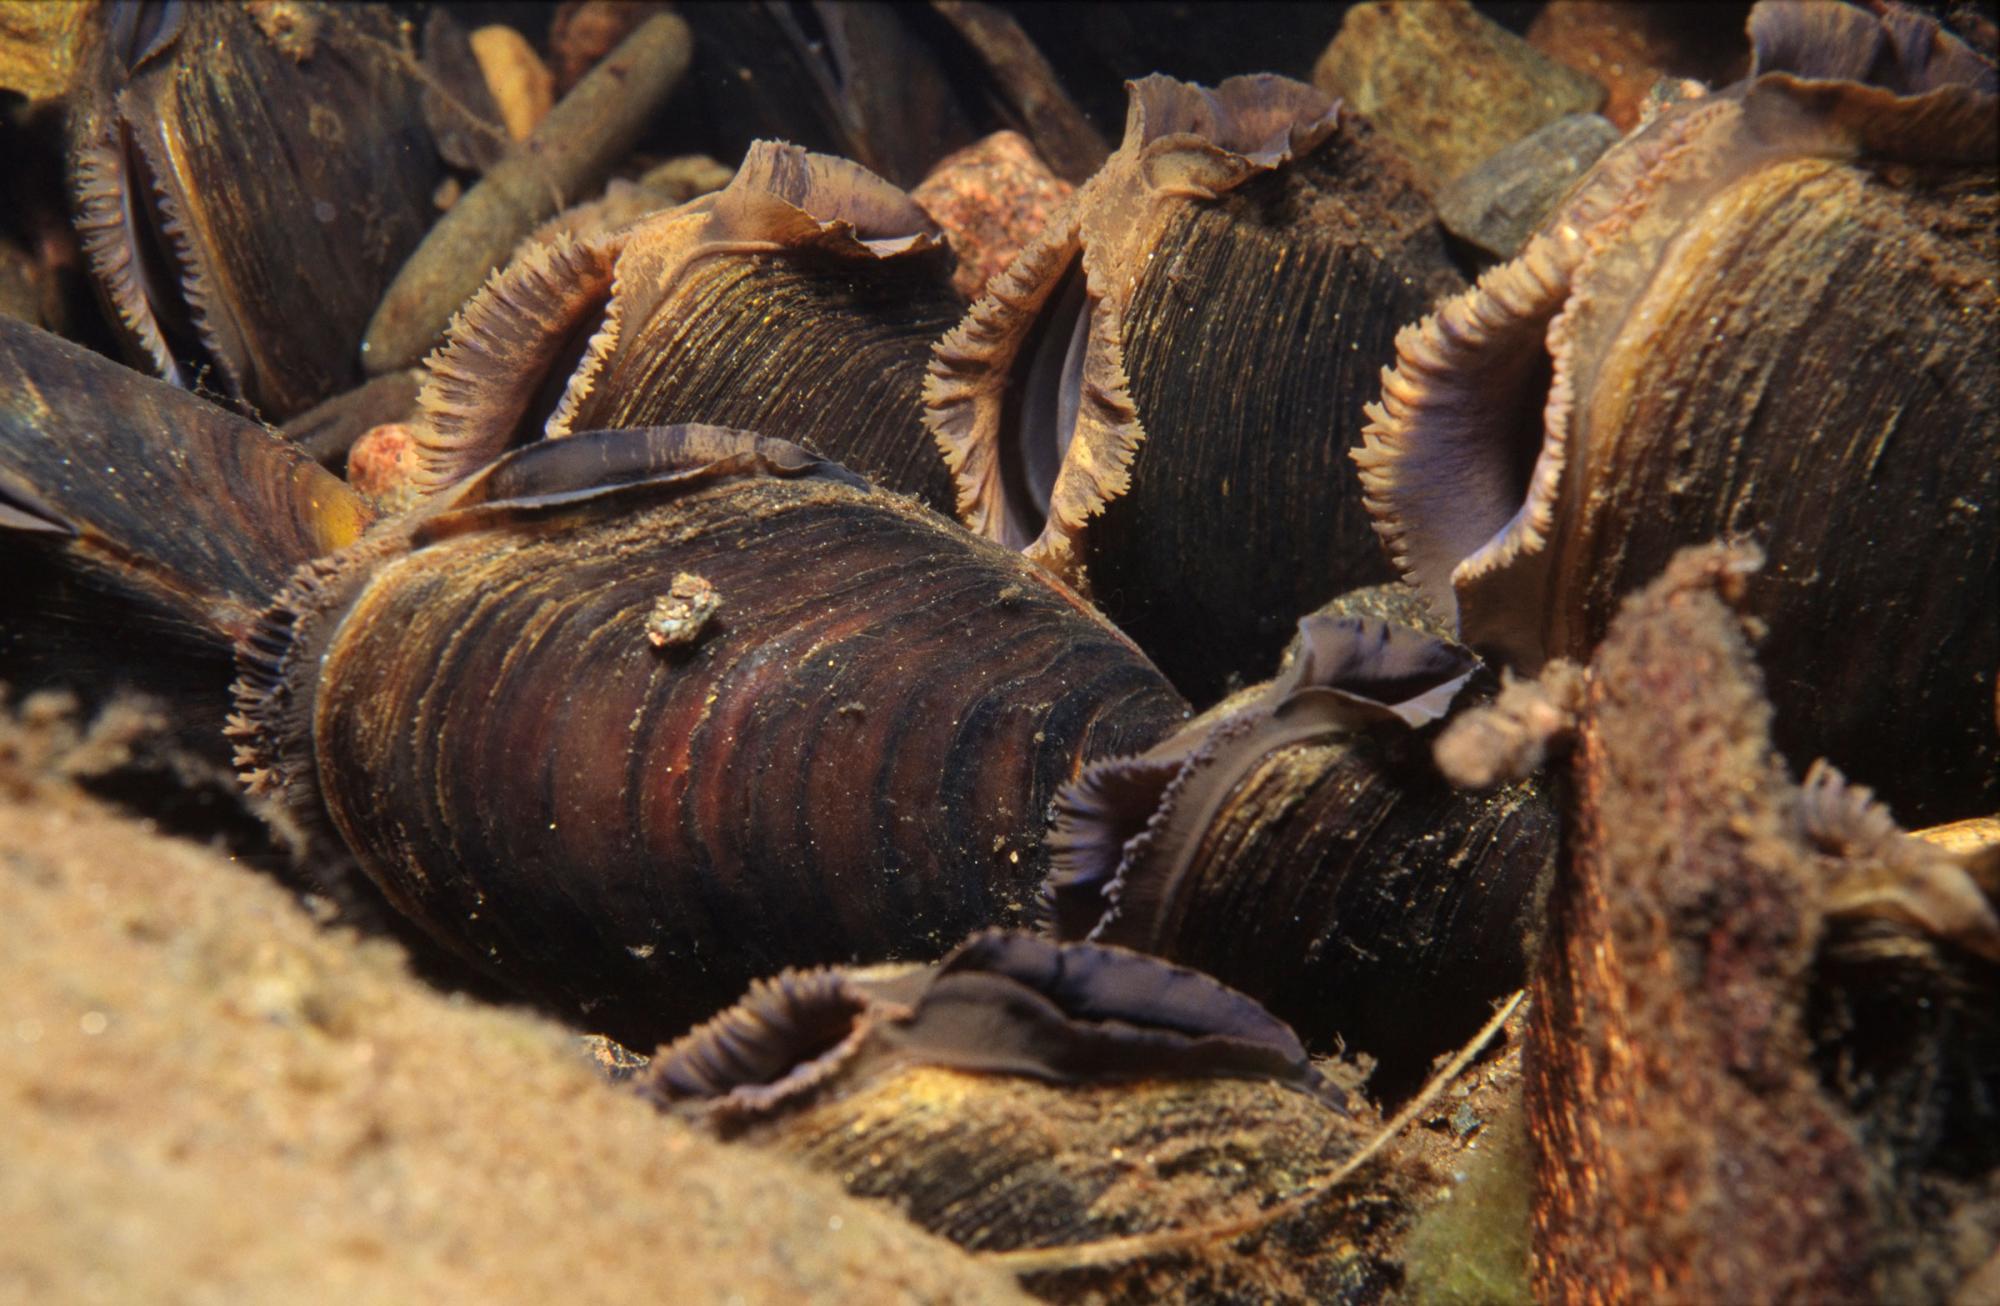 Freshwater pearl mussels (Margaritifera margaritifera) feeding in a river